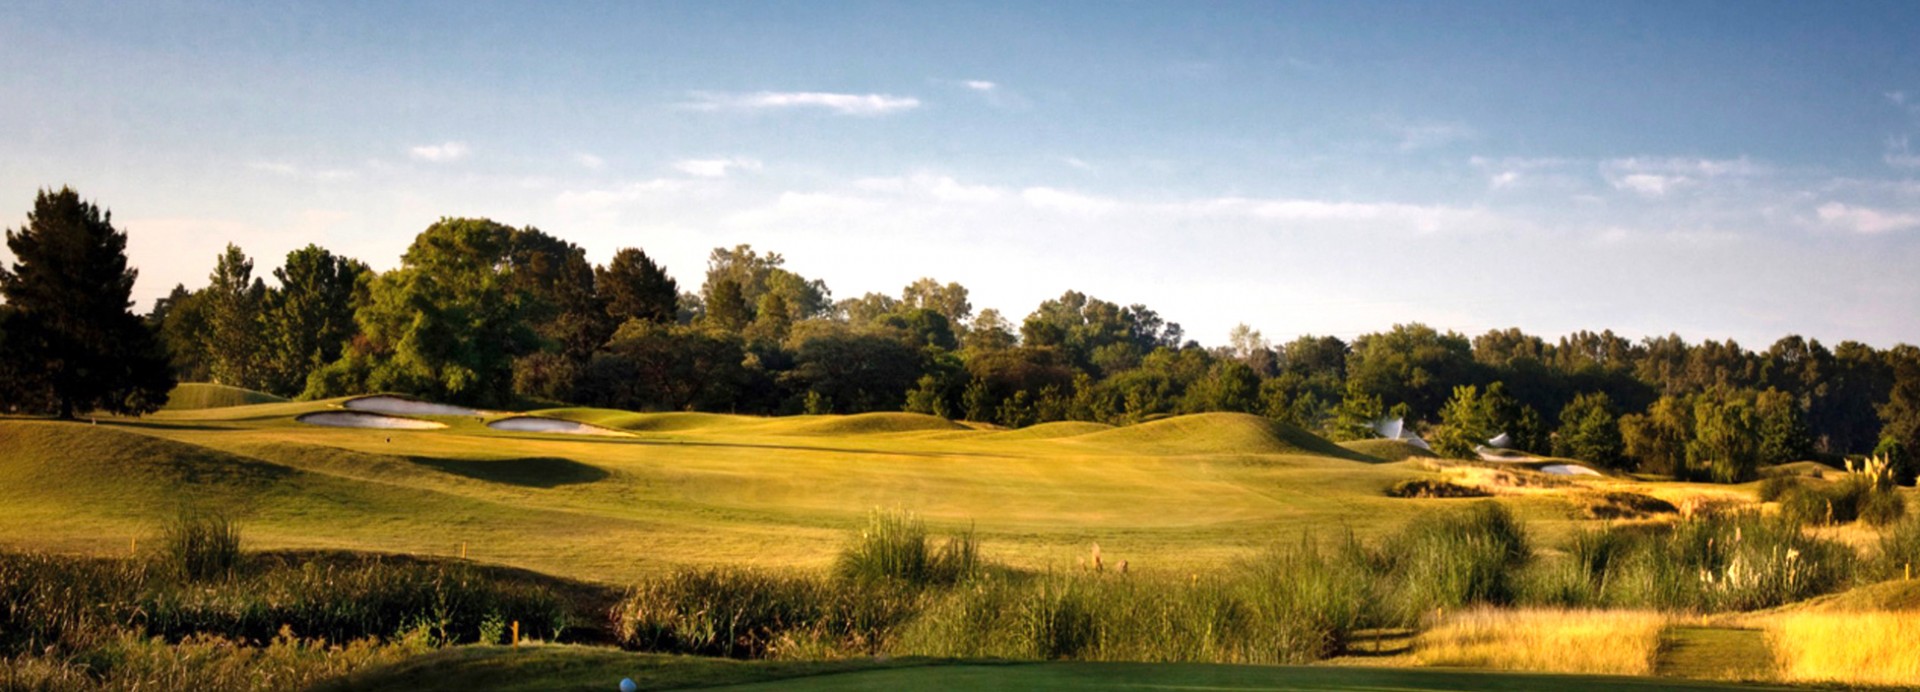 Buenos Aires Golf Club  | Golfové zájezdy, golfová dovolená, luxusní golf